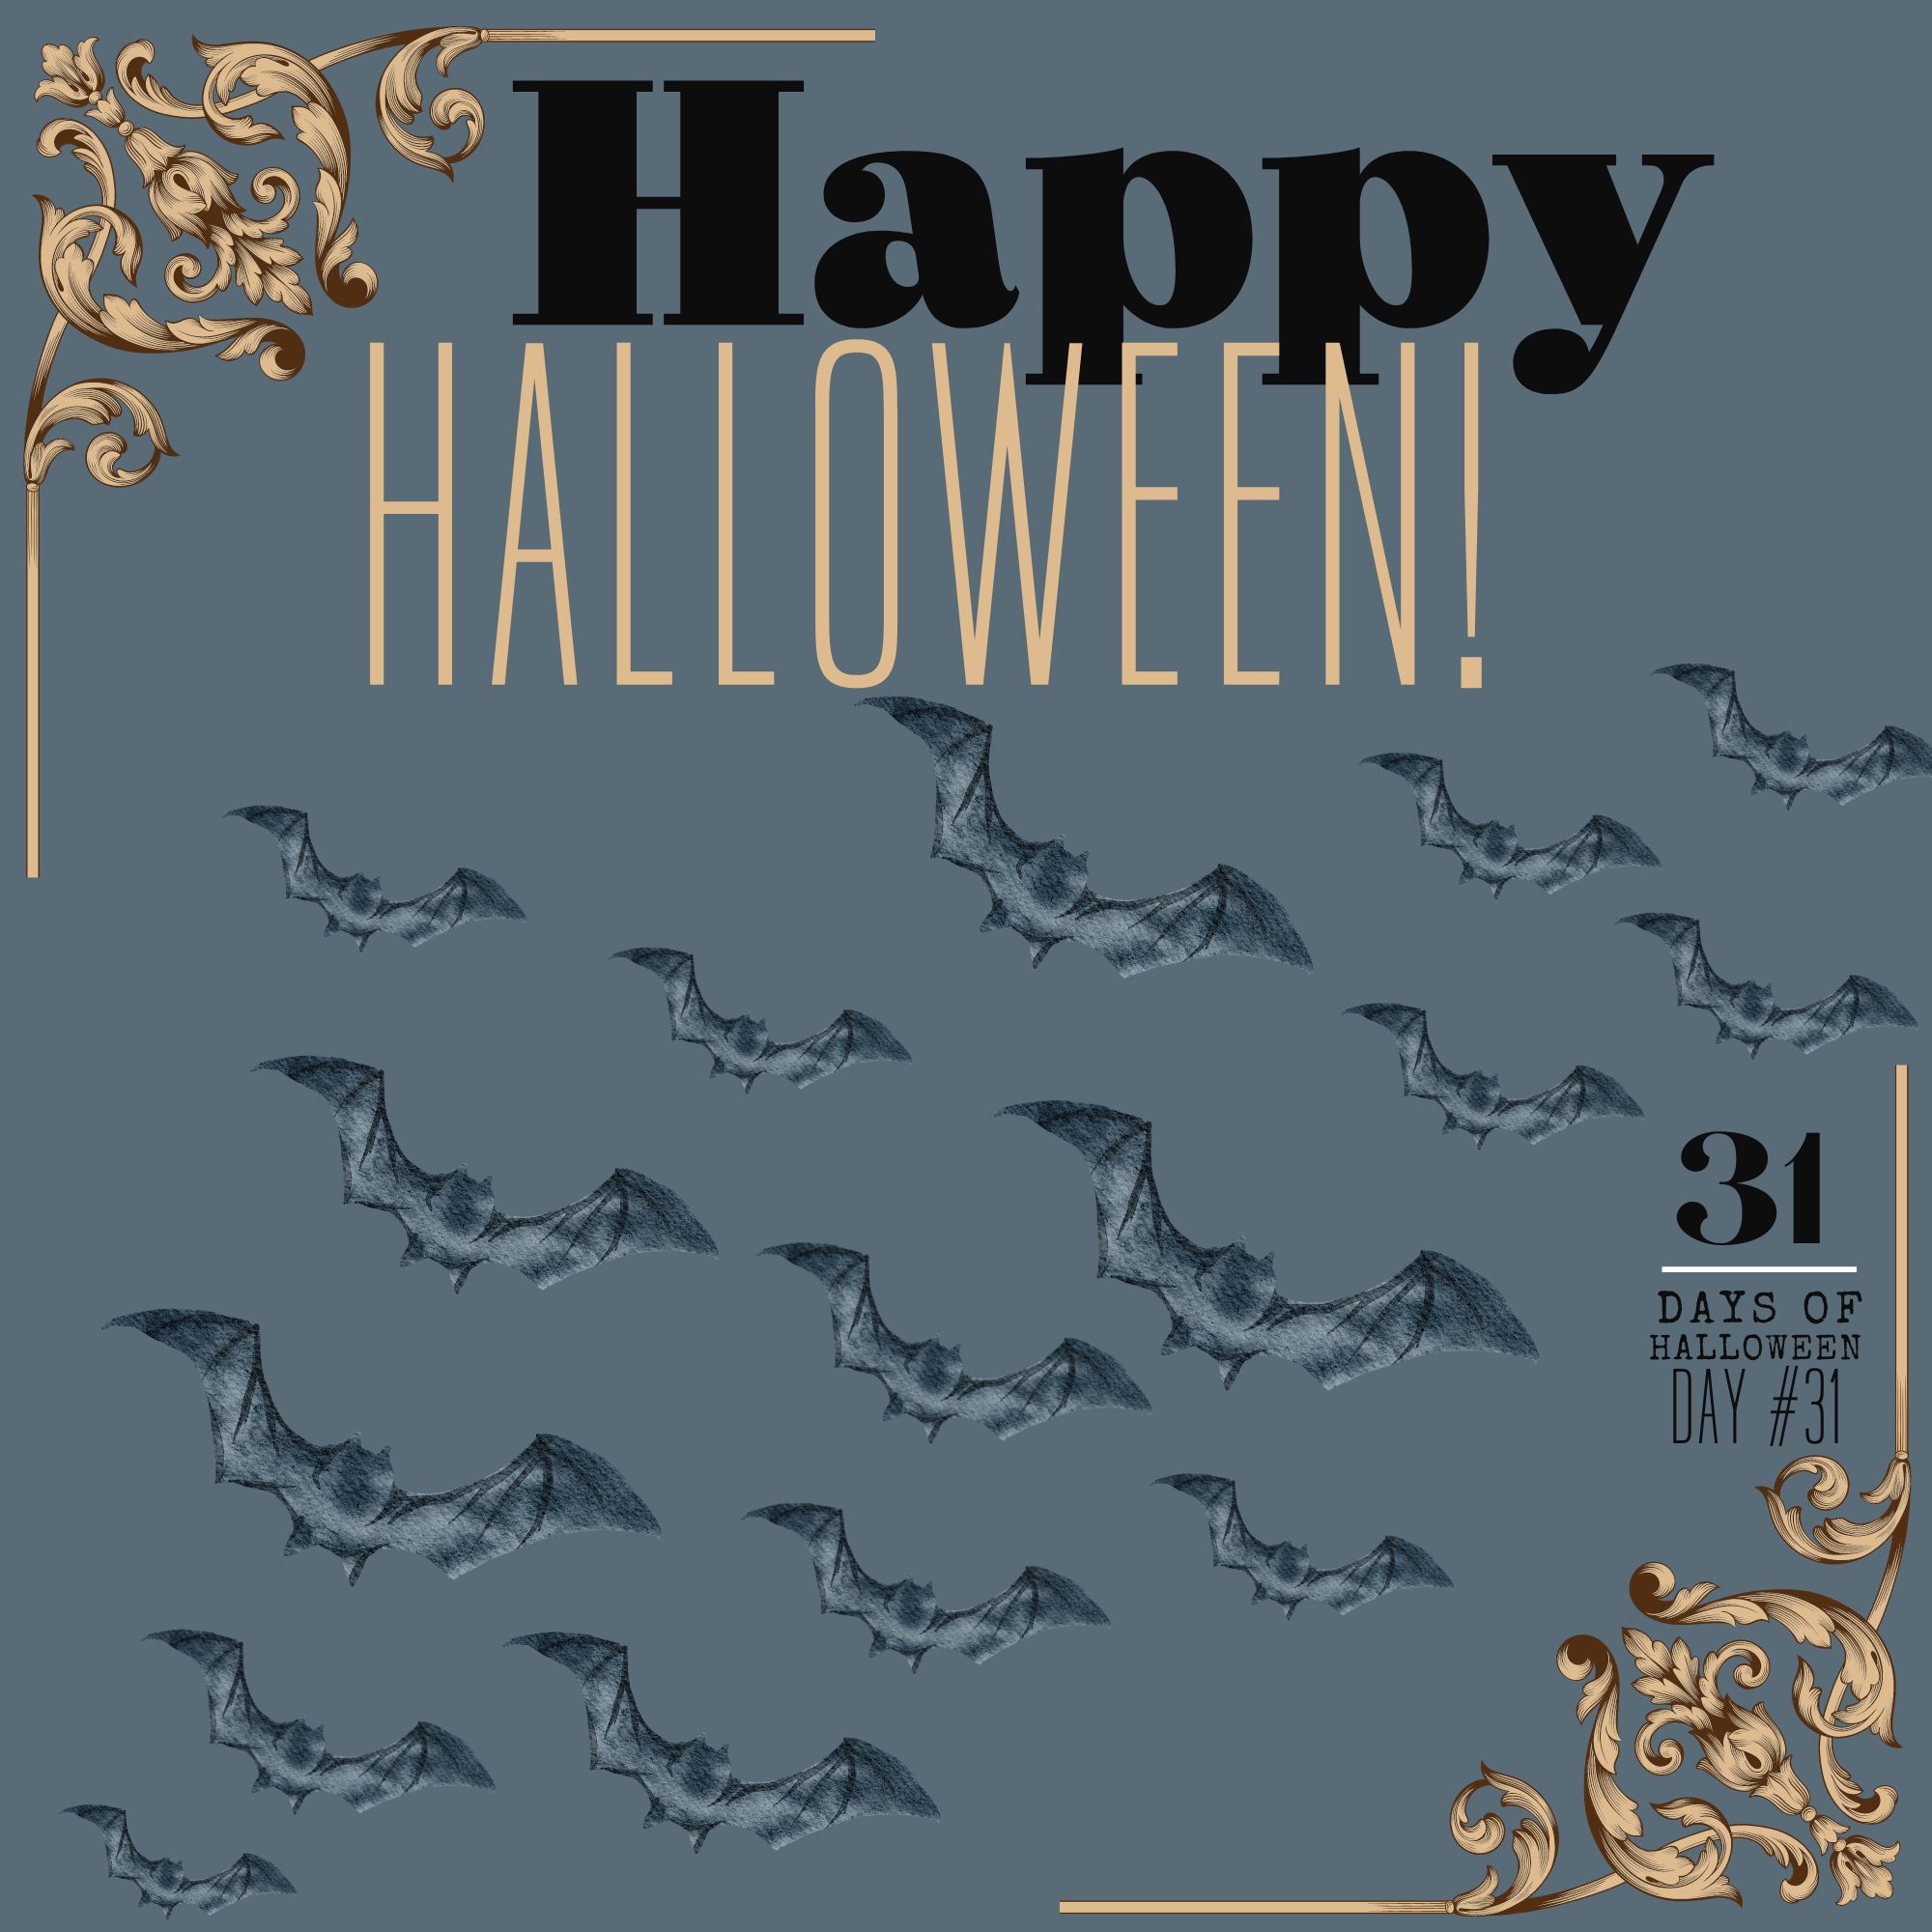 31 Days of Halloween: Day #31 … Happy Halloween!